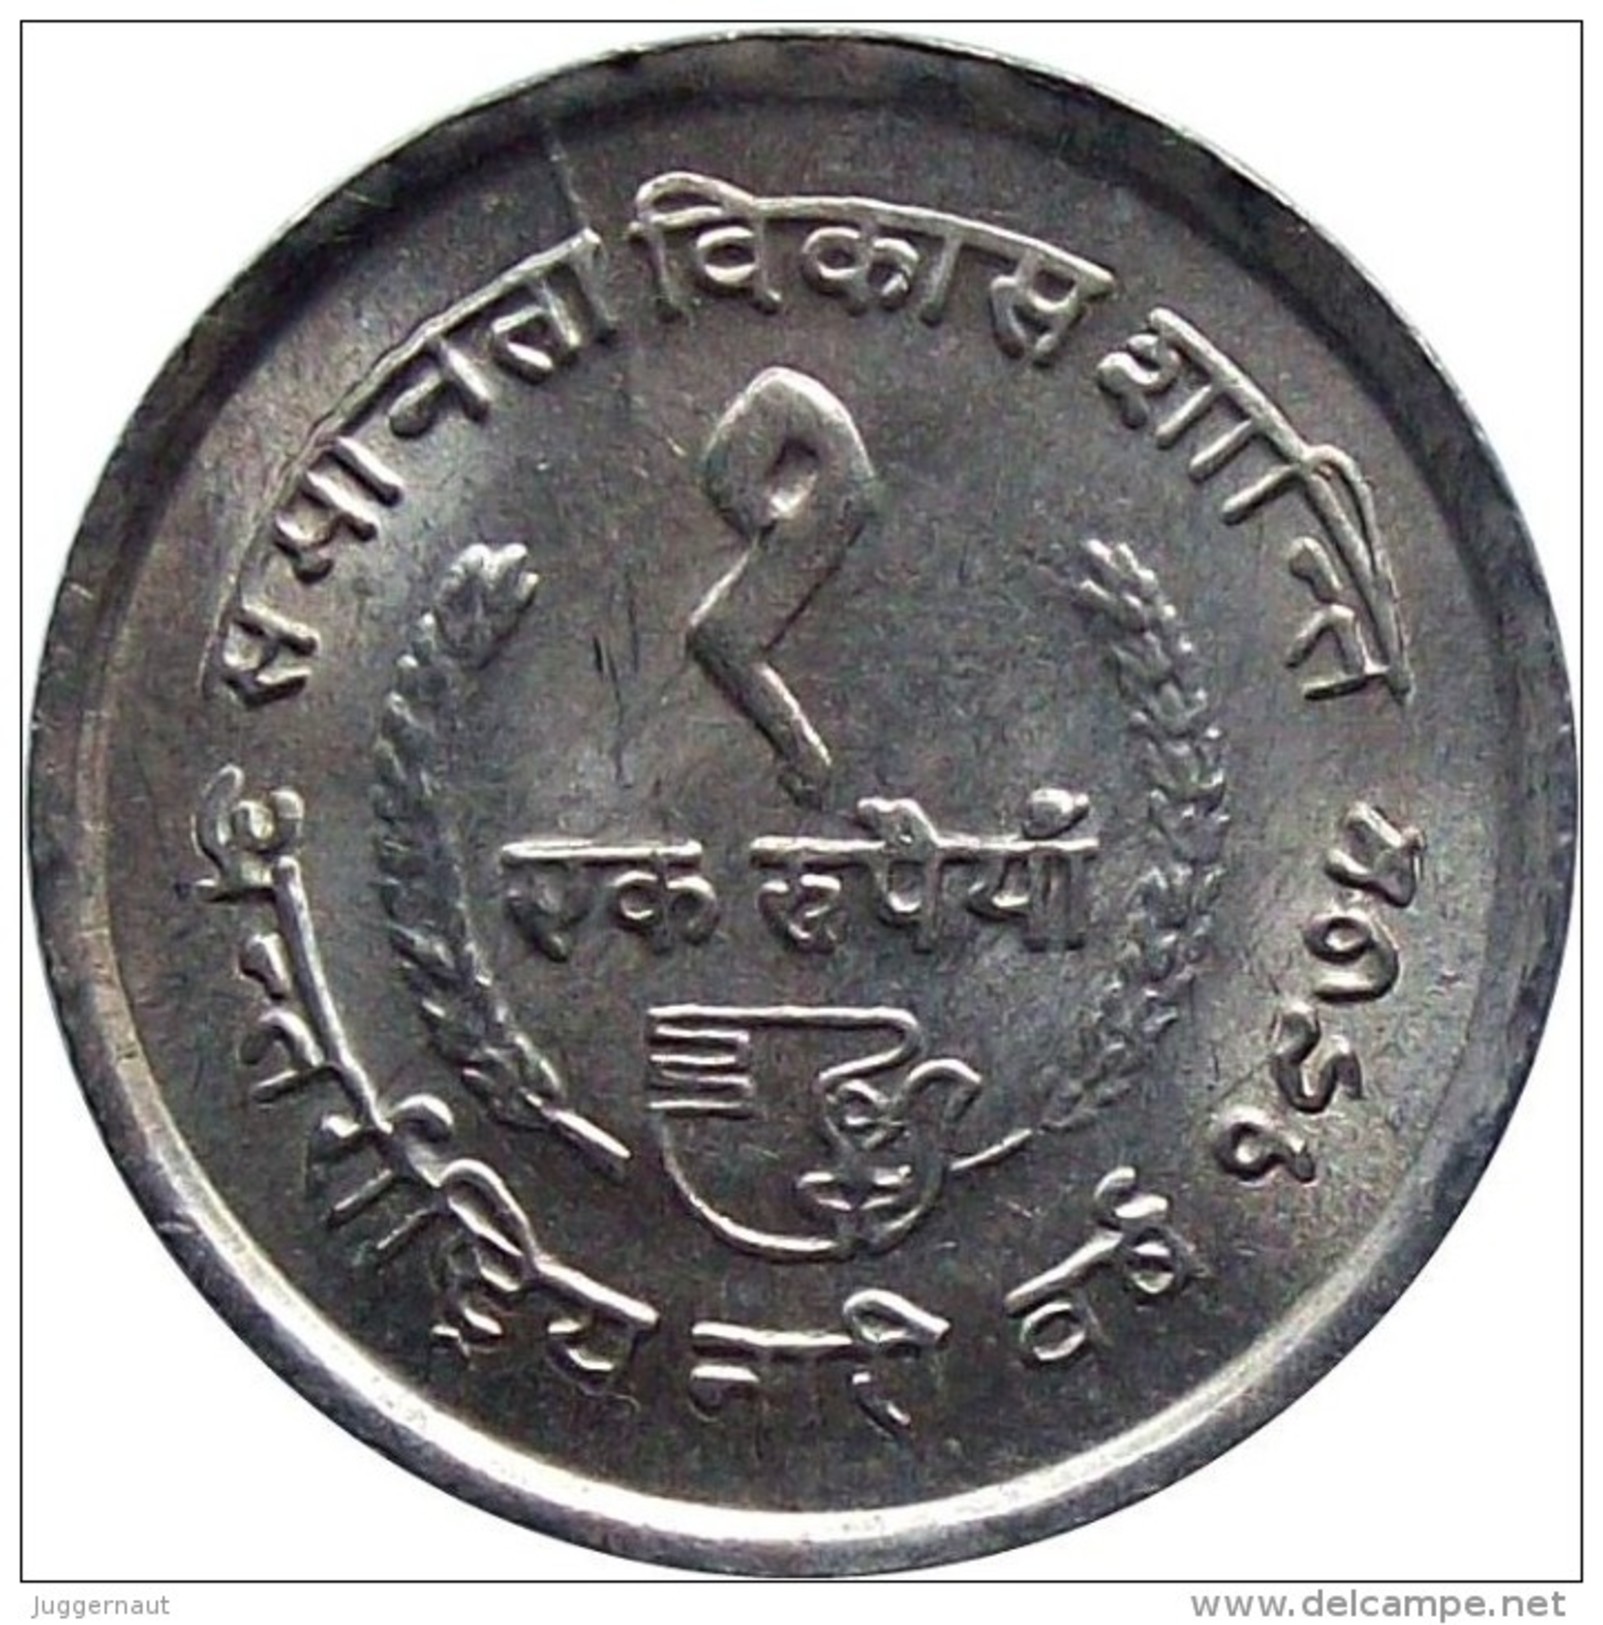 INTERNATIONAL WOMEN'S YEAR 1975 CIRCULATION COIN NEPAL 1975 KM-831 UNCIRCULATED UNC - Népal